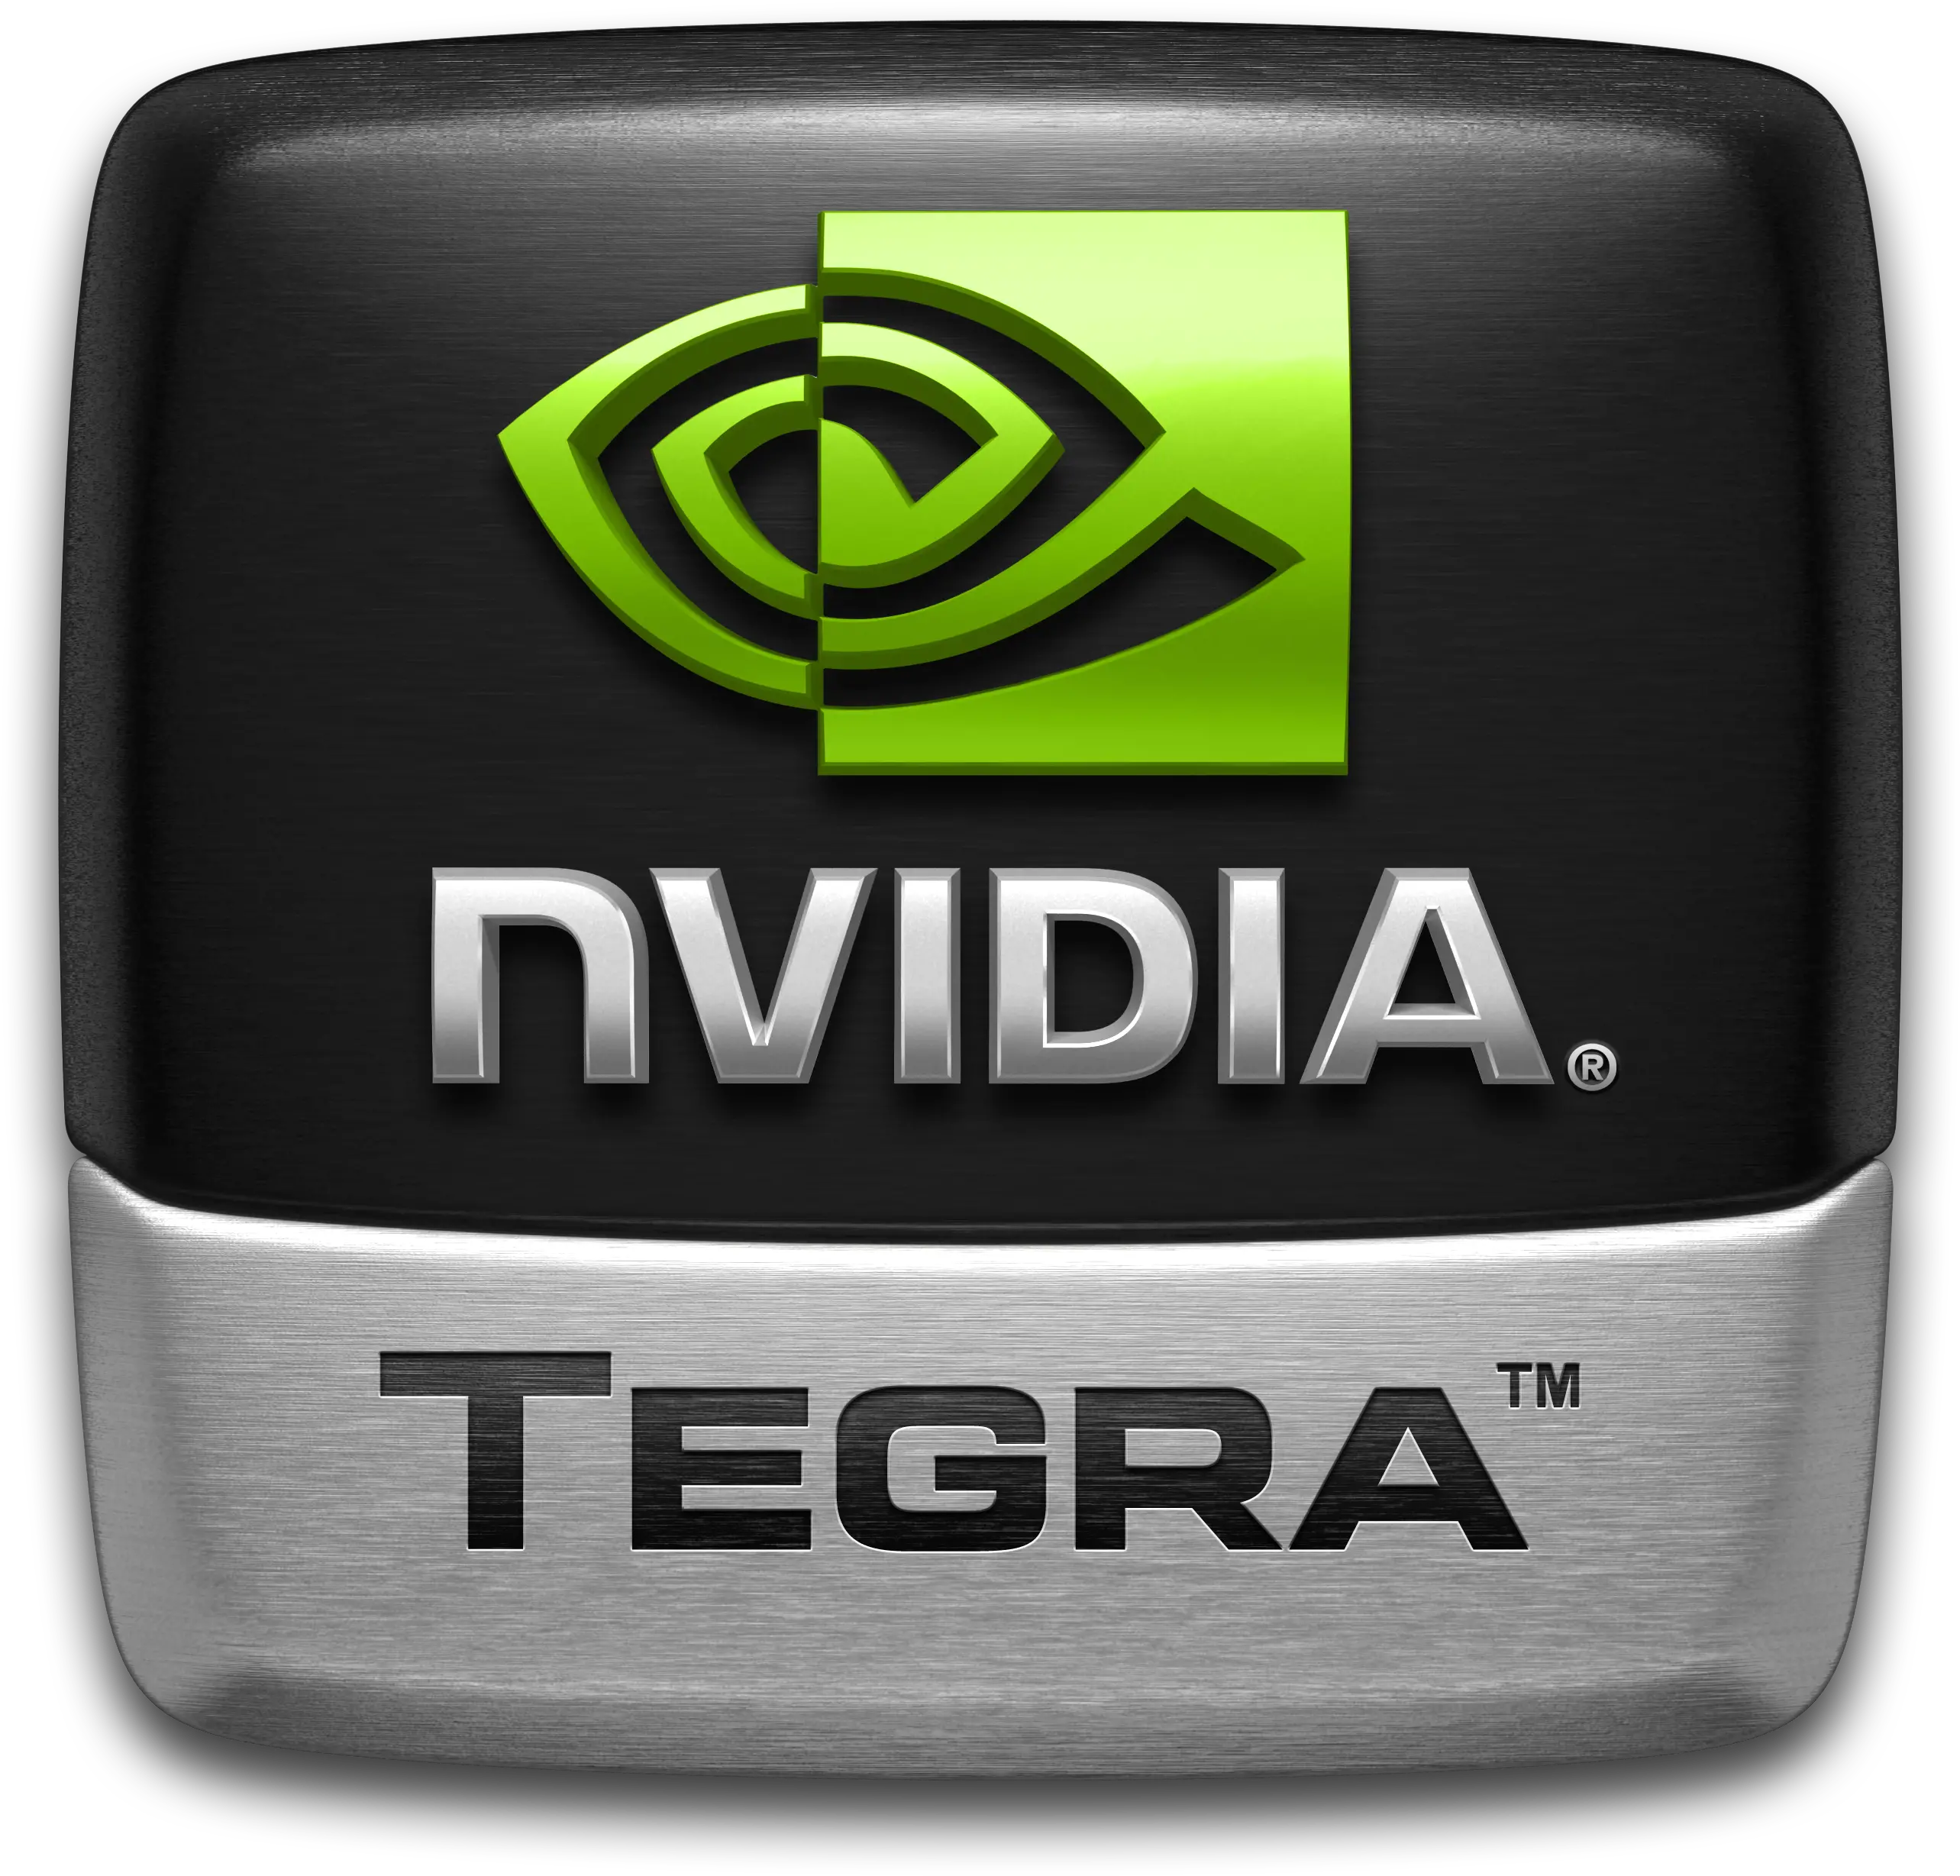 Nvidia Tegra Logo Gadgetynews Nvidia Geforce Png Nvidia Logo Transparent